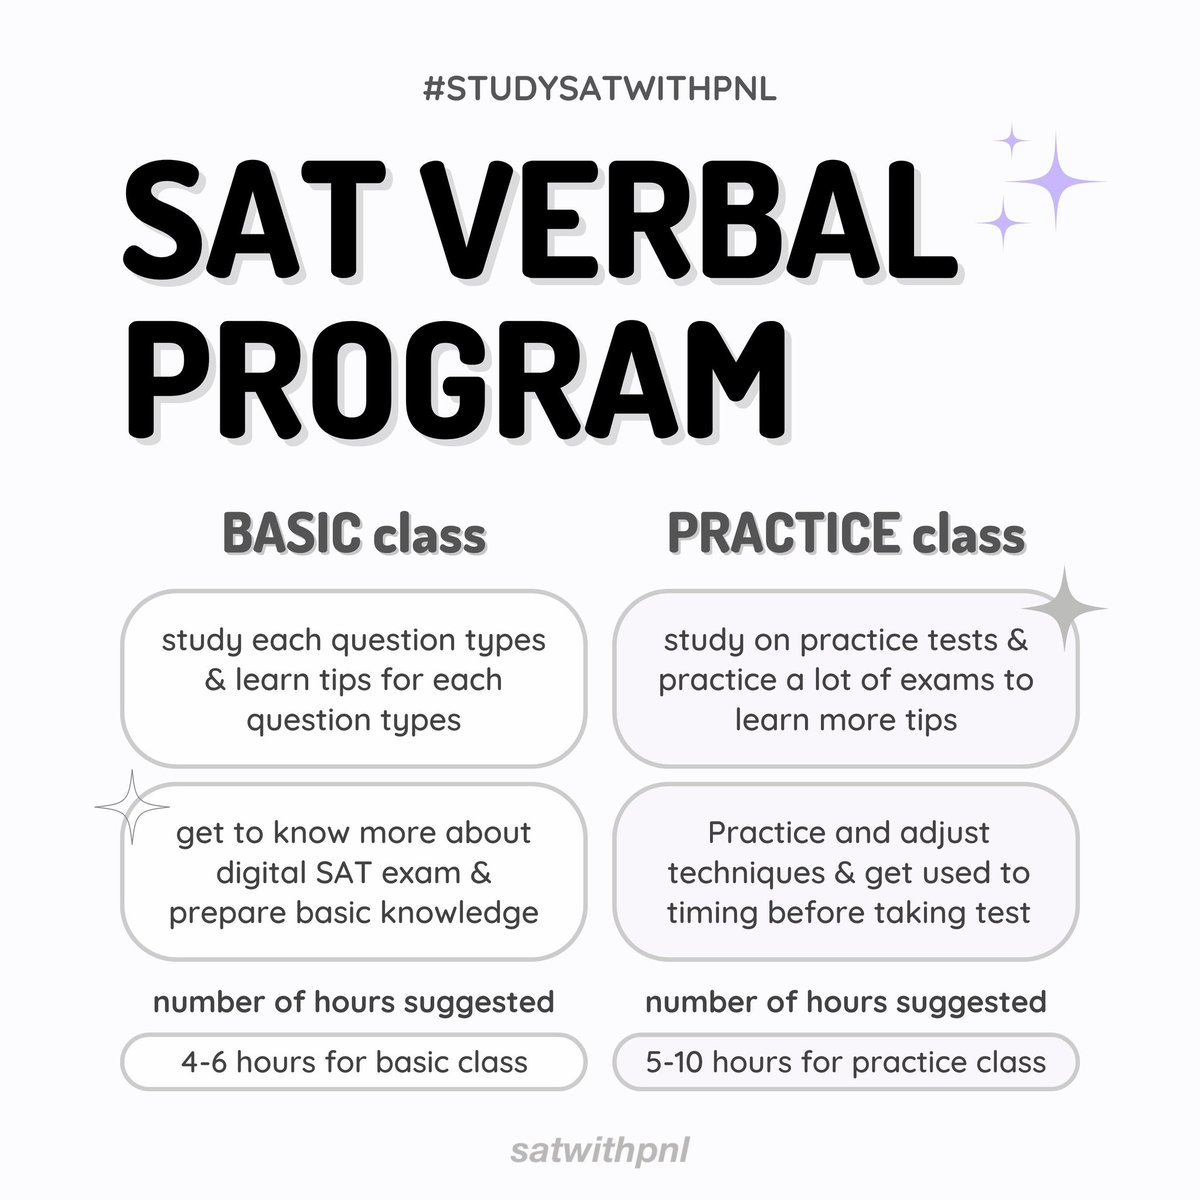 ˗ˏˋ SAT VERBAL PROGRAM ´ˎ˗ 

BASIC CLASS 🚶‍♂️💭
☆ Study each question types

PRACTICE CLASS 📑🖊
☆ STUDY QUESTIONS

♡ สอนโดย P'Ploy 

#dek66 #dek67 #TCAS #TCAS66 #bbacu #bbatu #สอนsat #สอบsat #รับสอนsat #satverbal #digitalsat #ติวsat #satreading #satwriting #สอนภาษาอังกฤษ